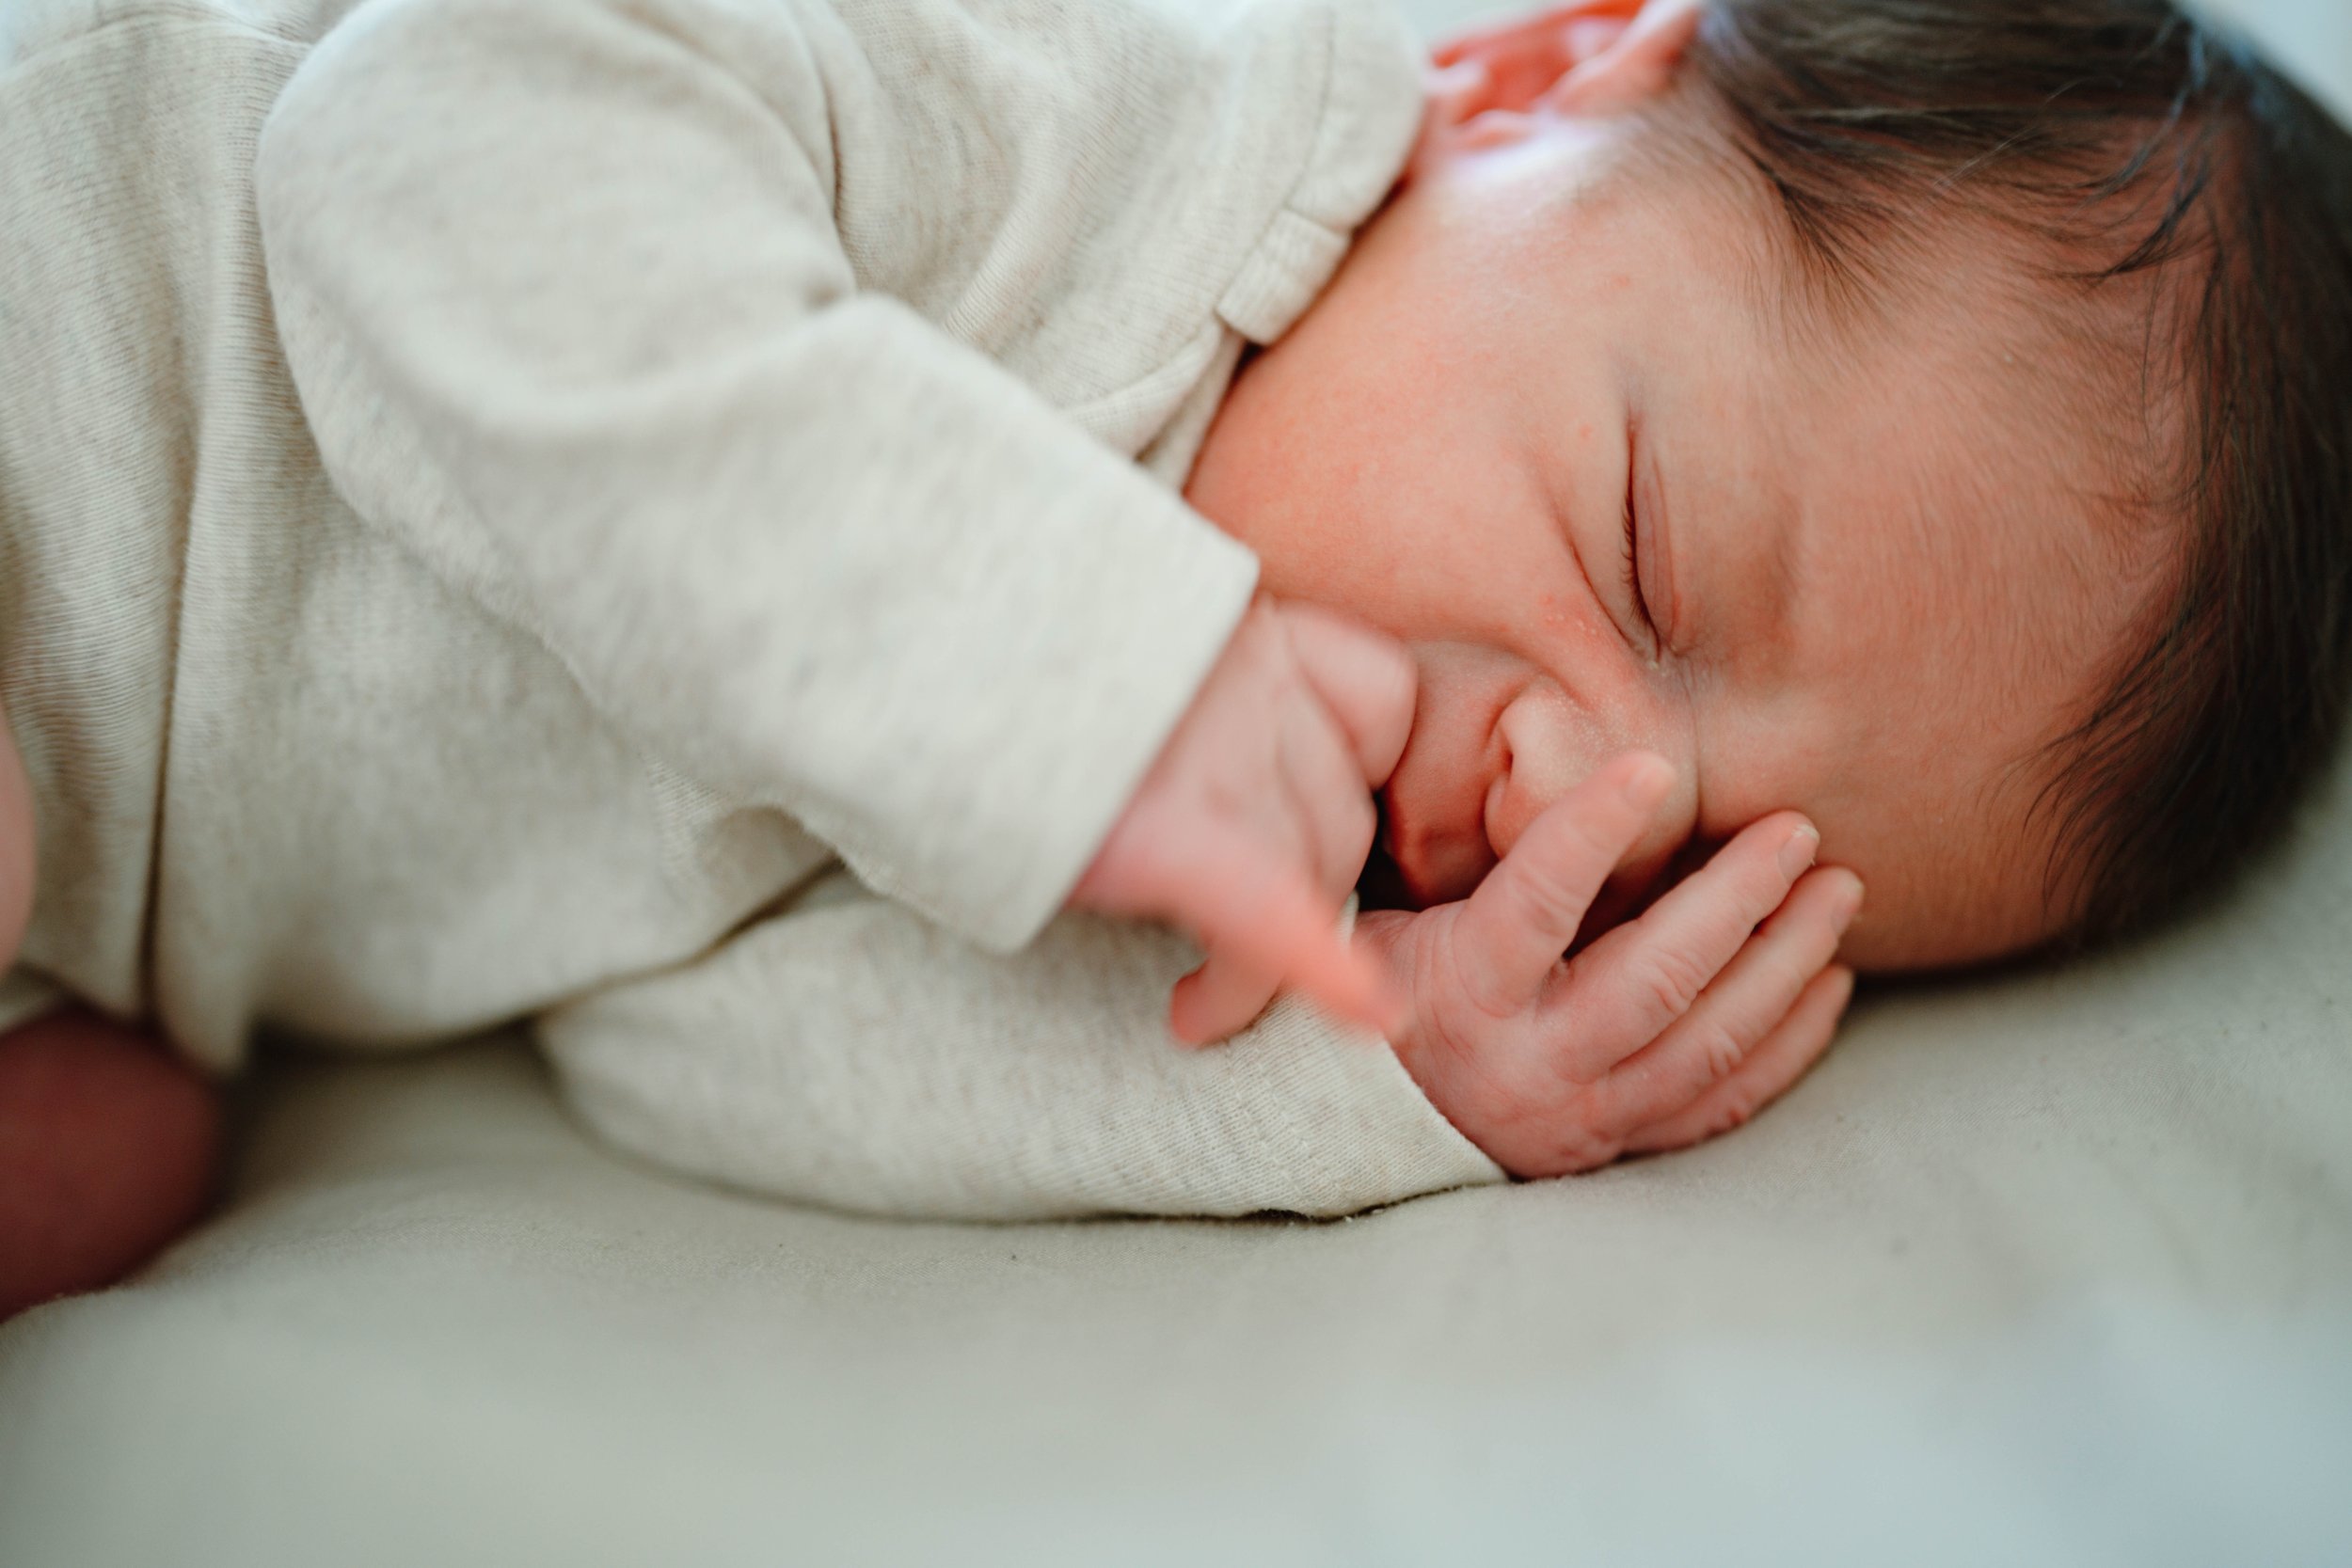 St. Leonard, MD, In home newborn photo session